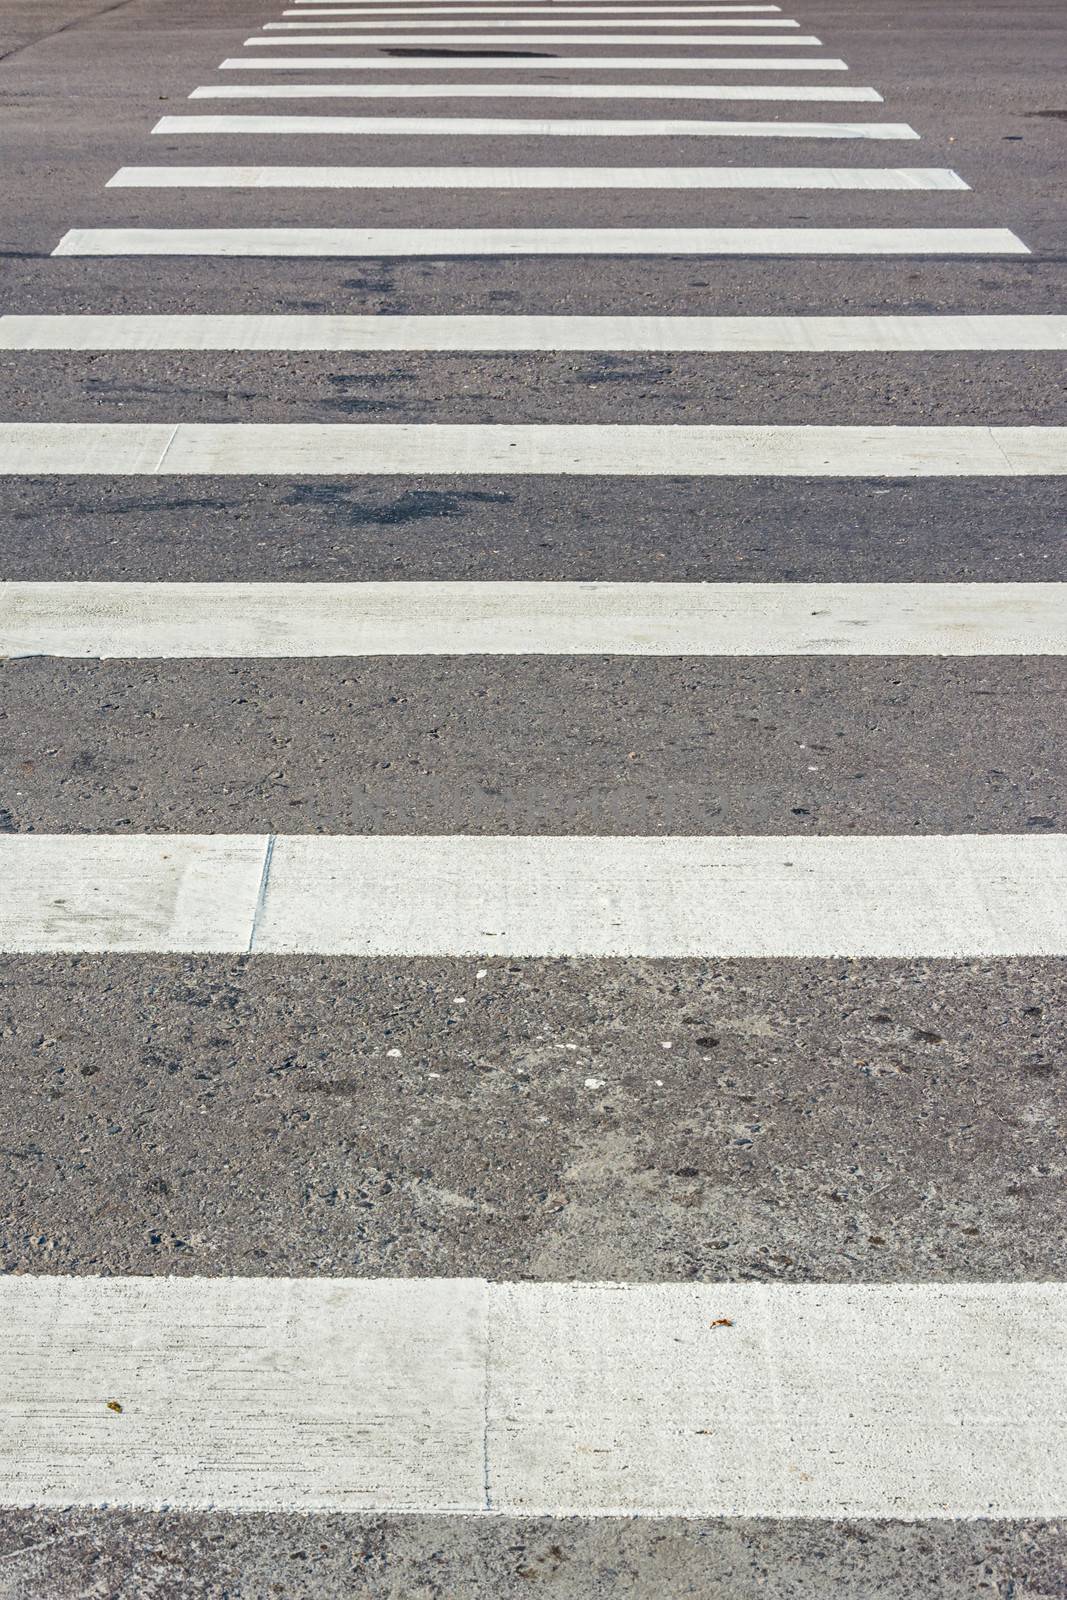 Zebra pedestrian crossing, traffic walk way for people. Vertical position